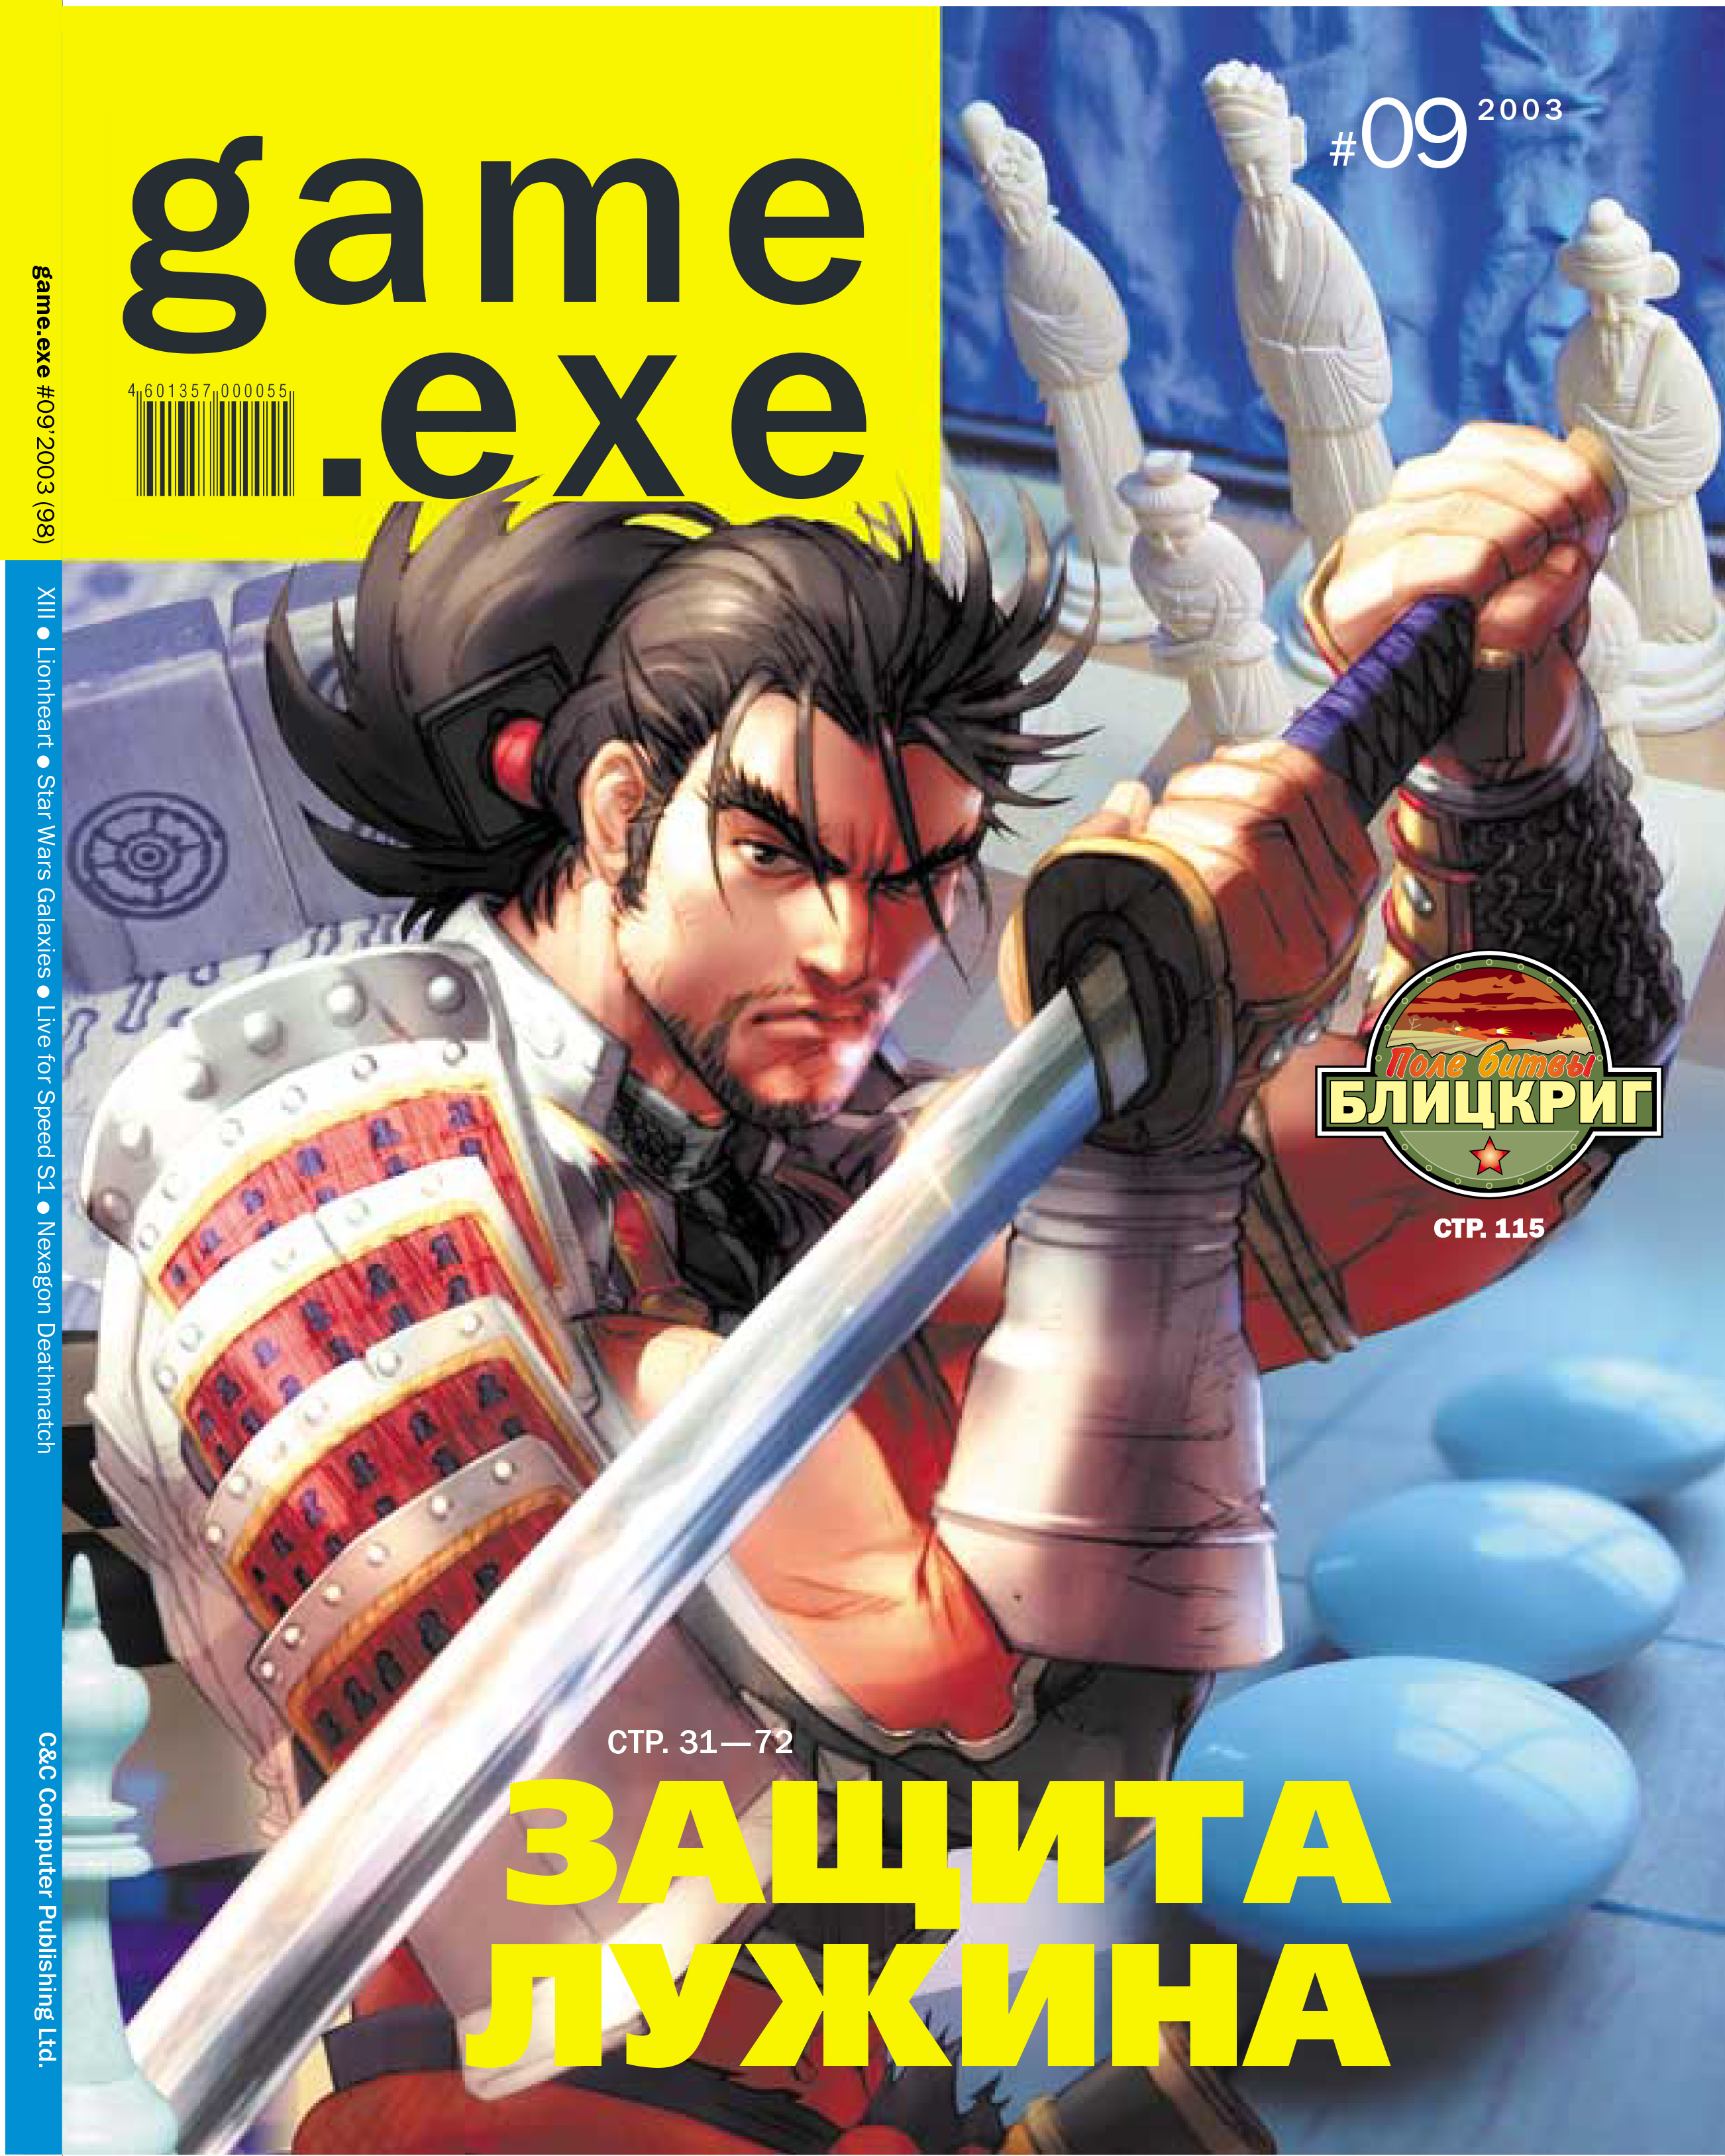 Download game exe. Game exe журнал 2003. Game.exe. Game.exe 1997. Game exe журнал 2005.